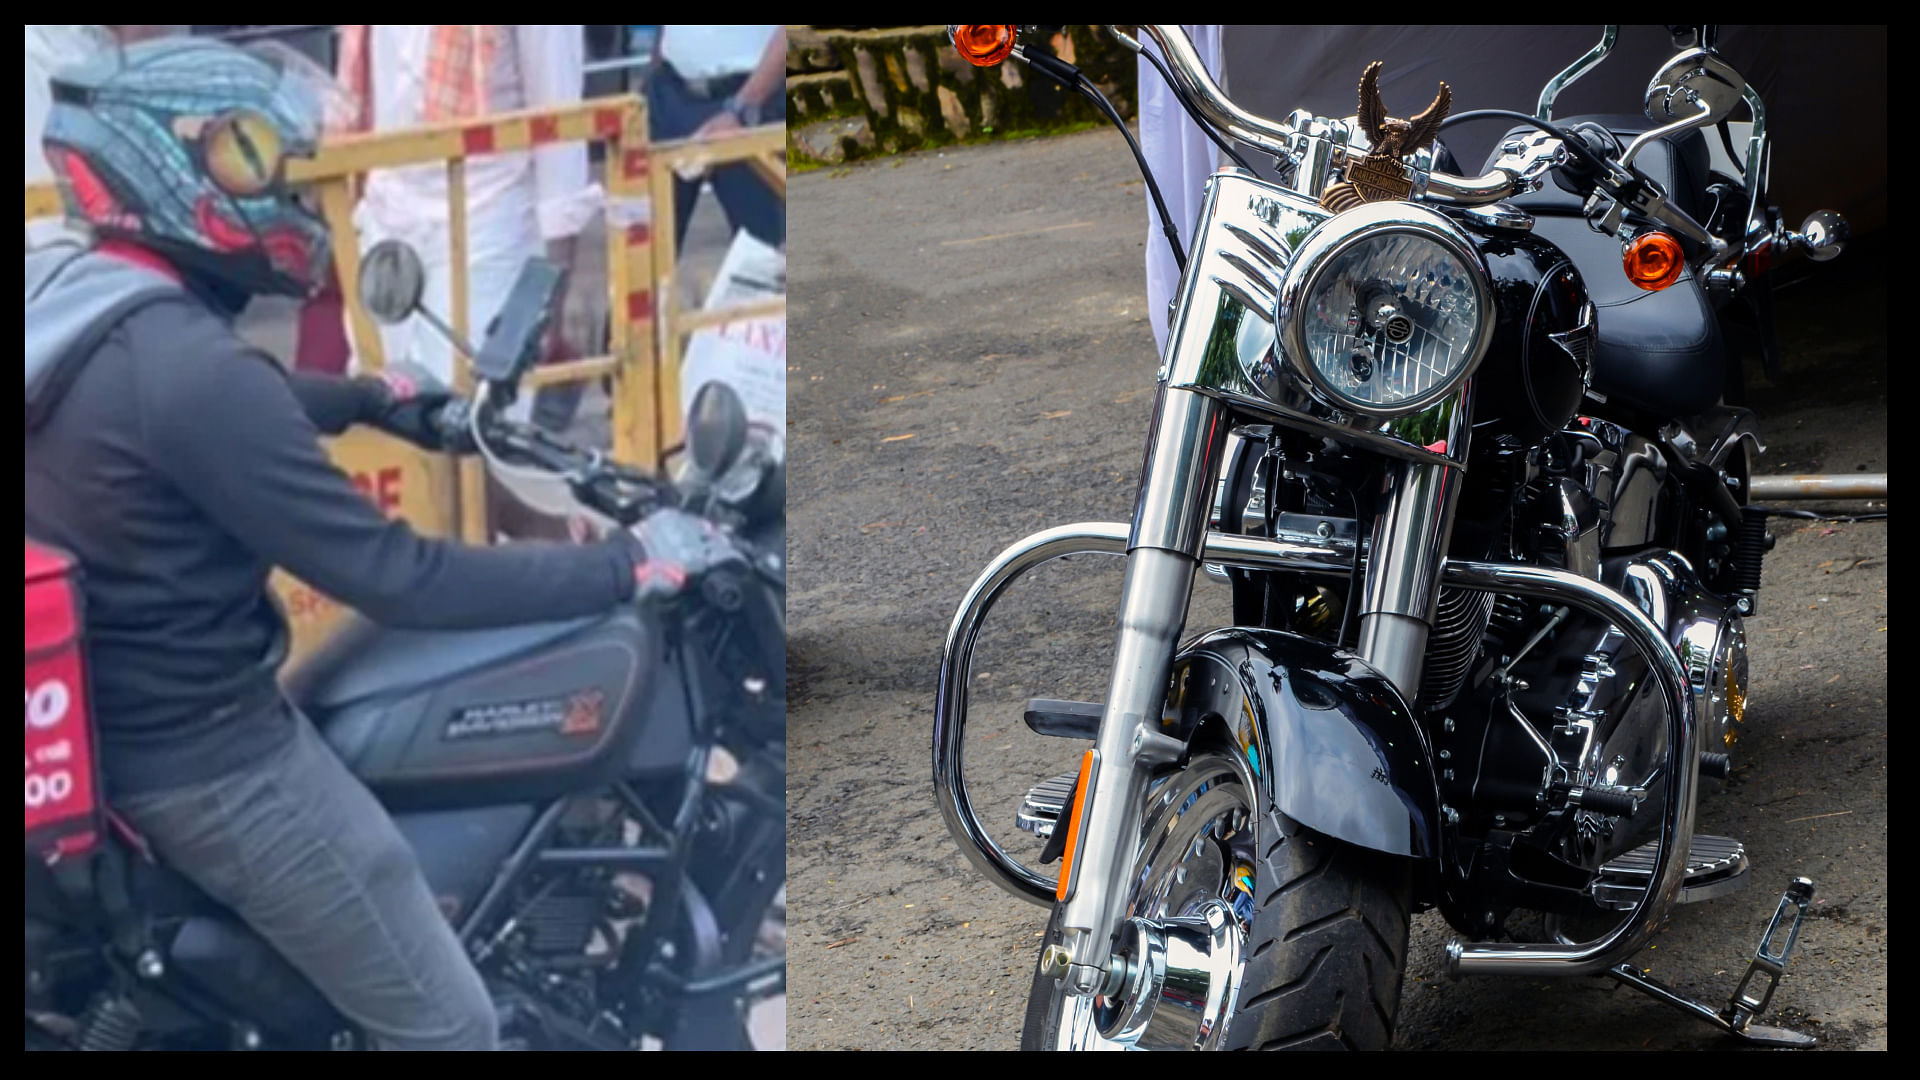 Zomato Delivery boy seen delivering food on Harley Davidson bike worth Rs 2.4 lakh